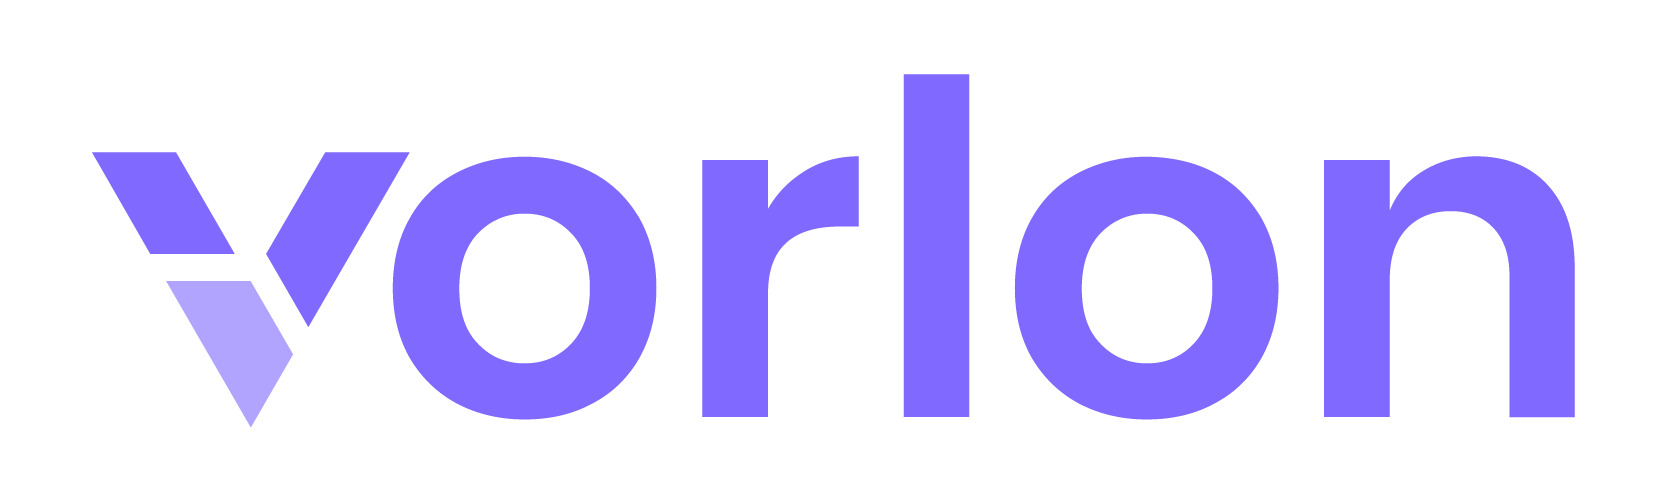 Vorlon logo_two tone light (PNG)